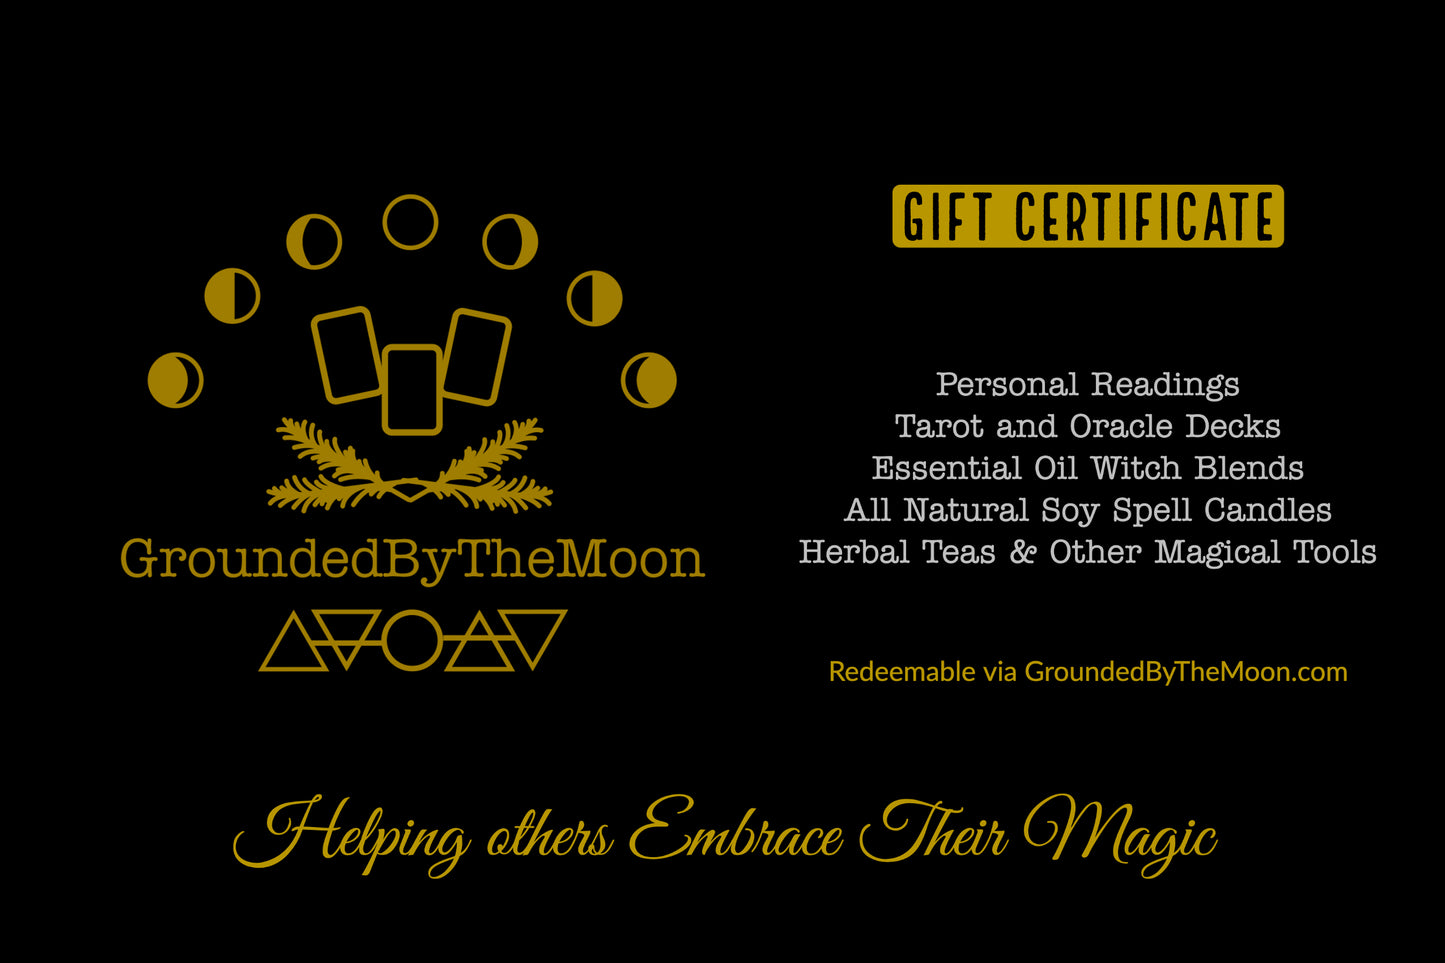 GroundedByTheMoon Gift Certificate